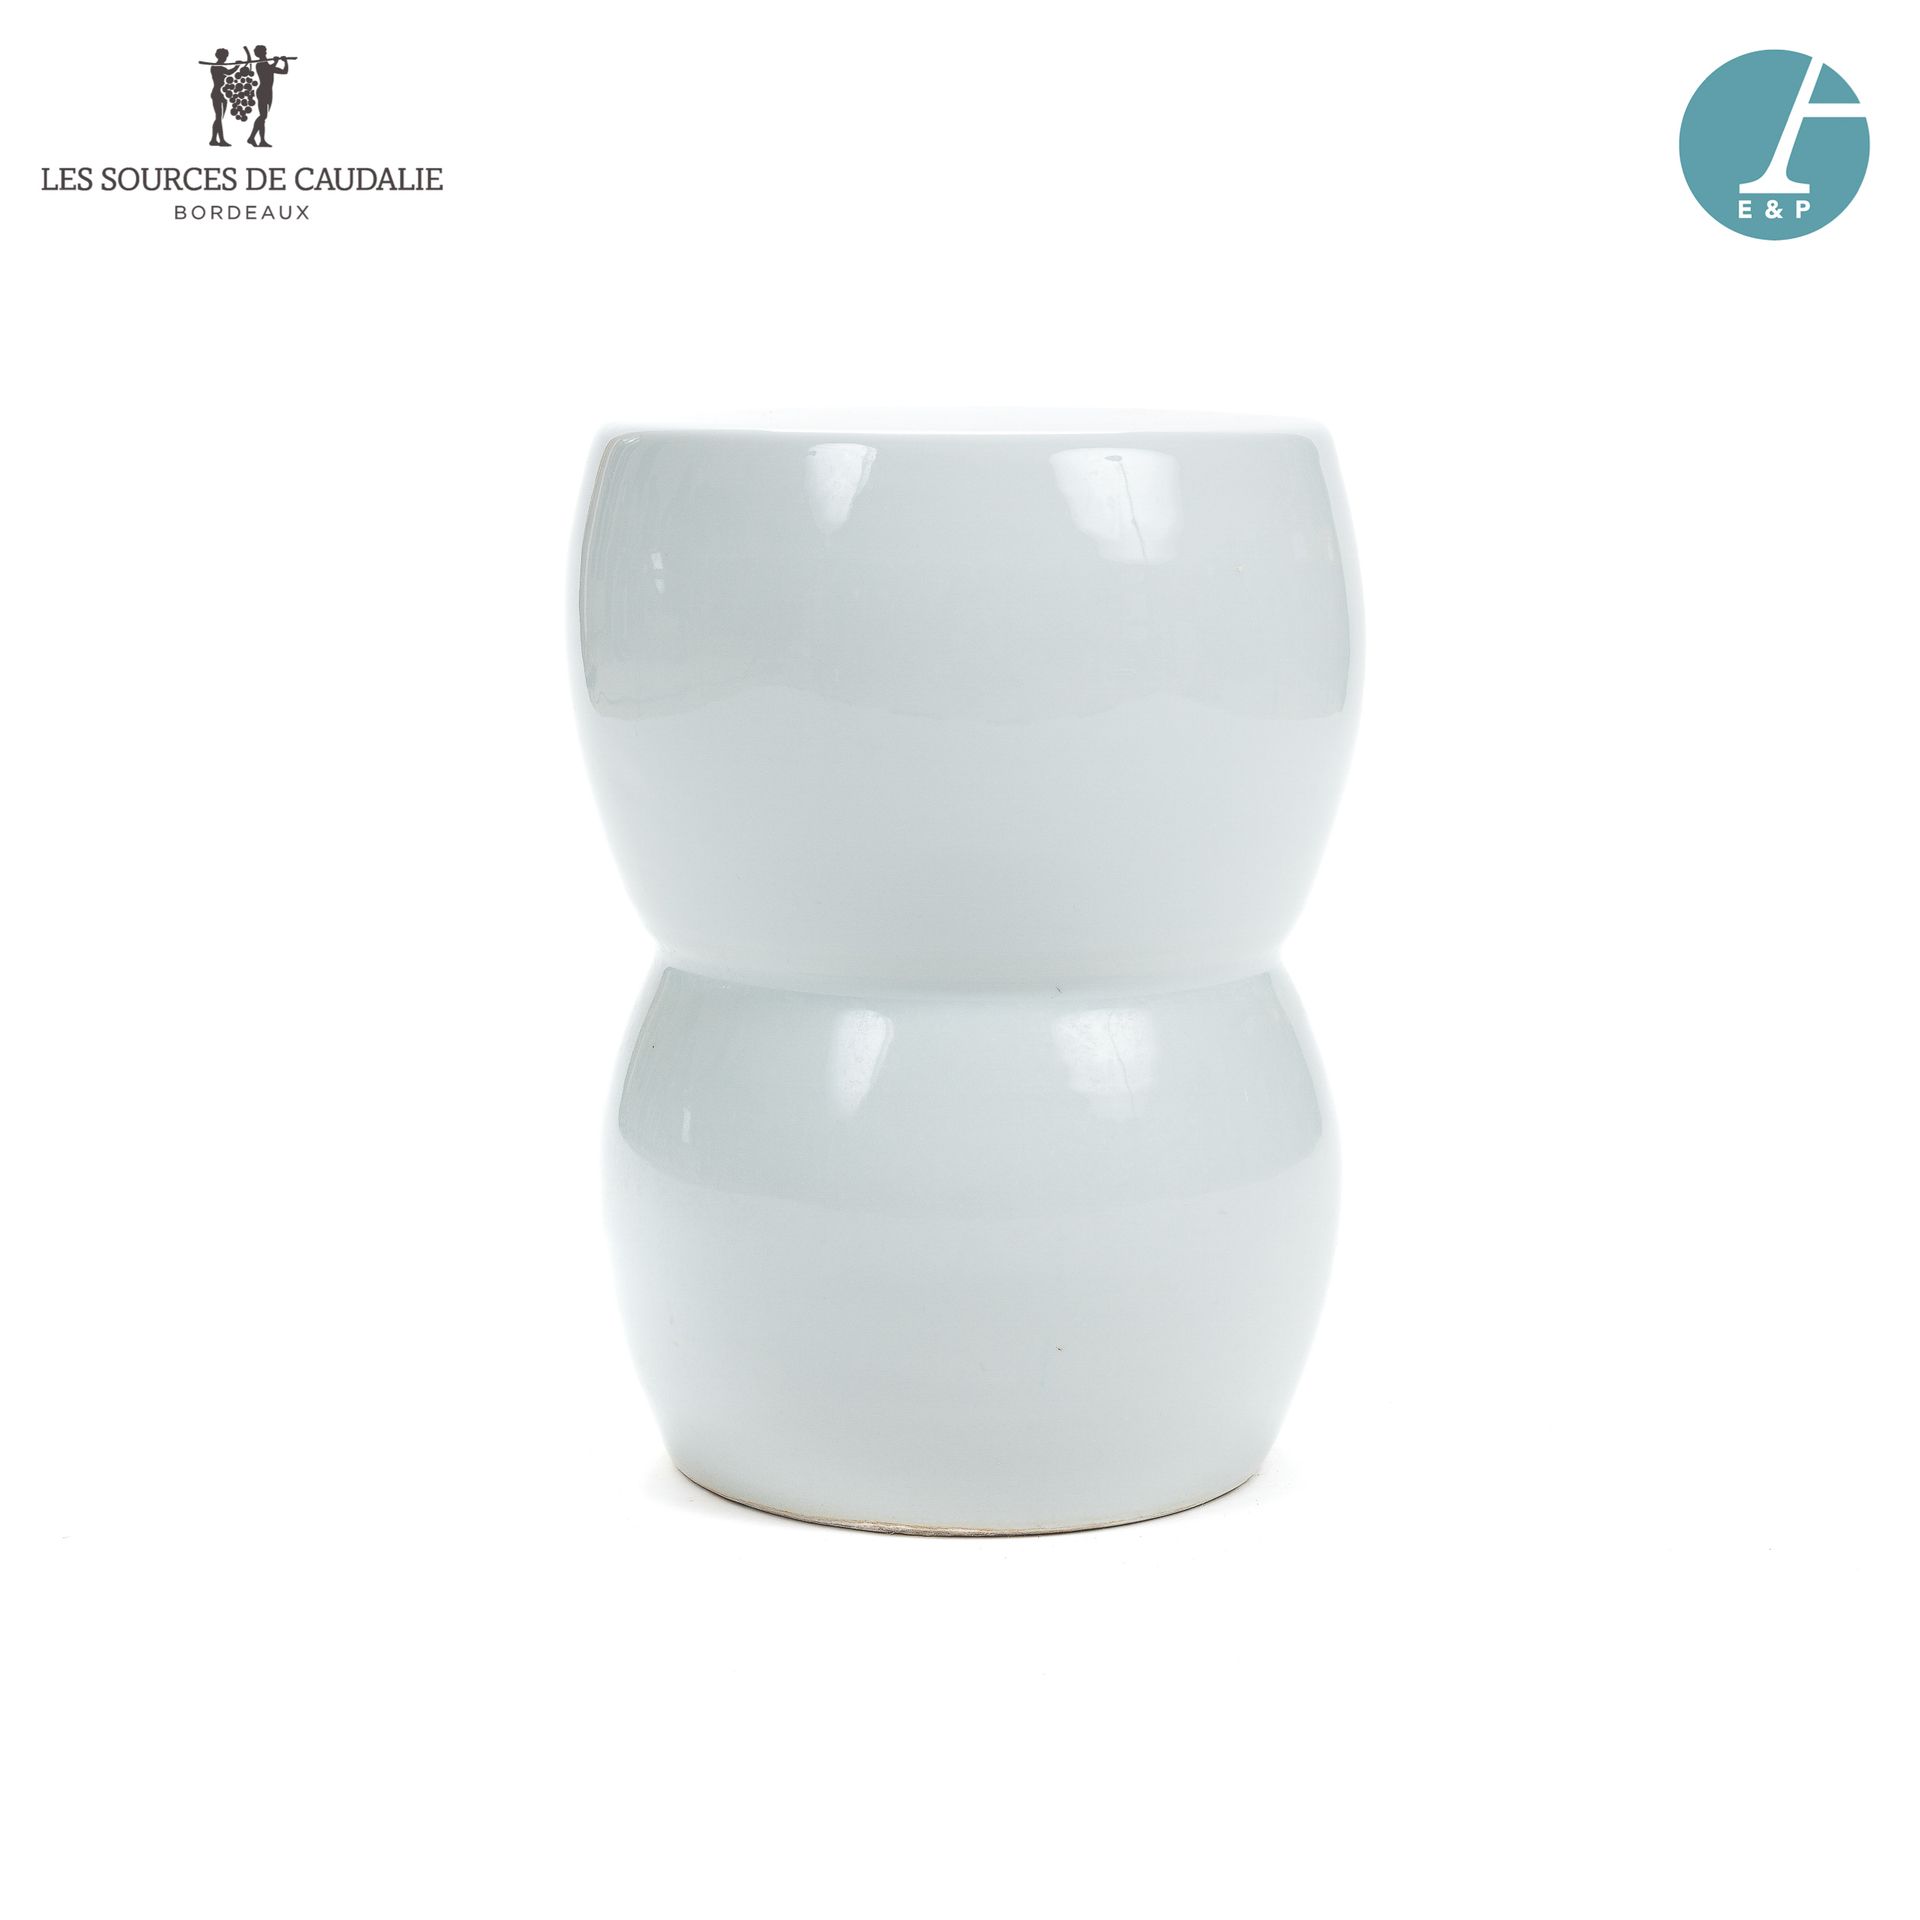 Null 从3号房 "Les Pampres "出发

白色（略带蓝色）的陶瓷凳子。

高：42厘米。